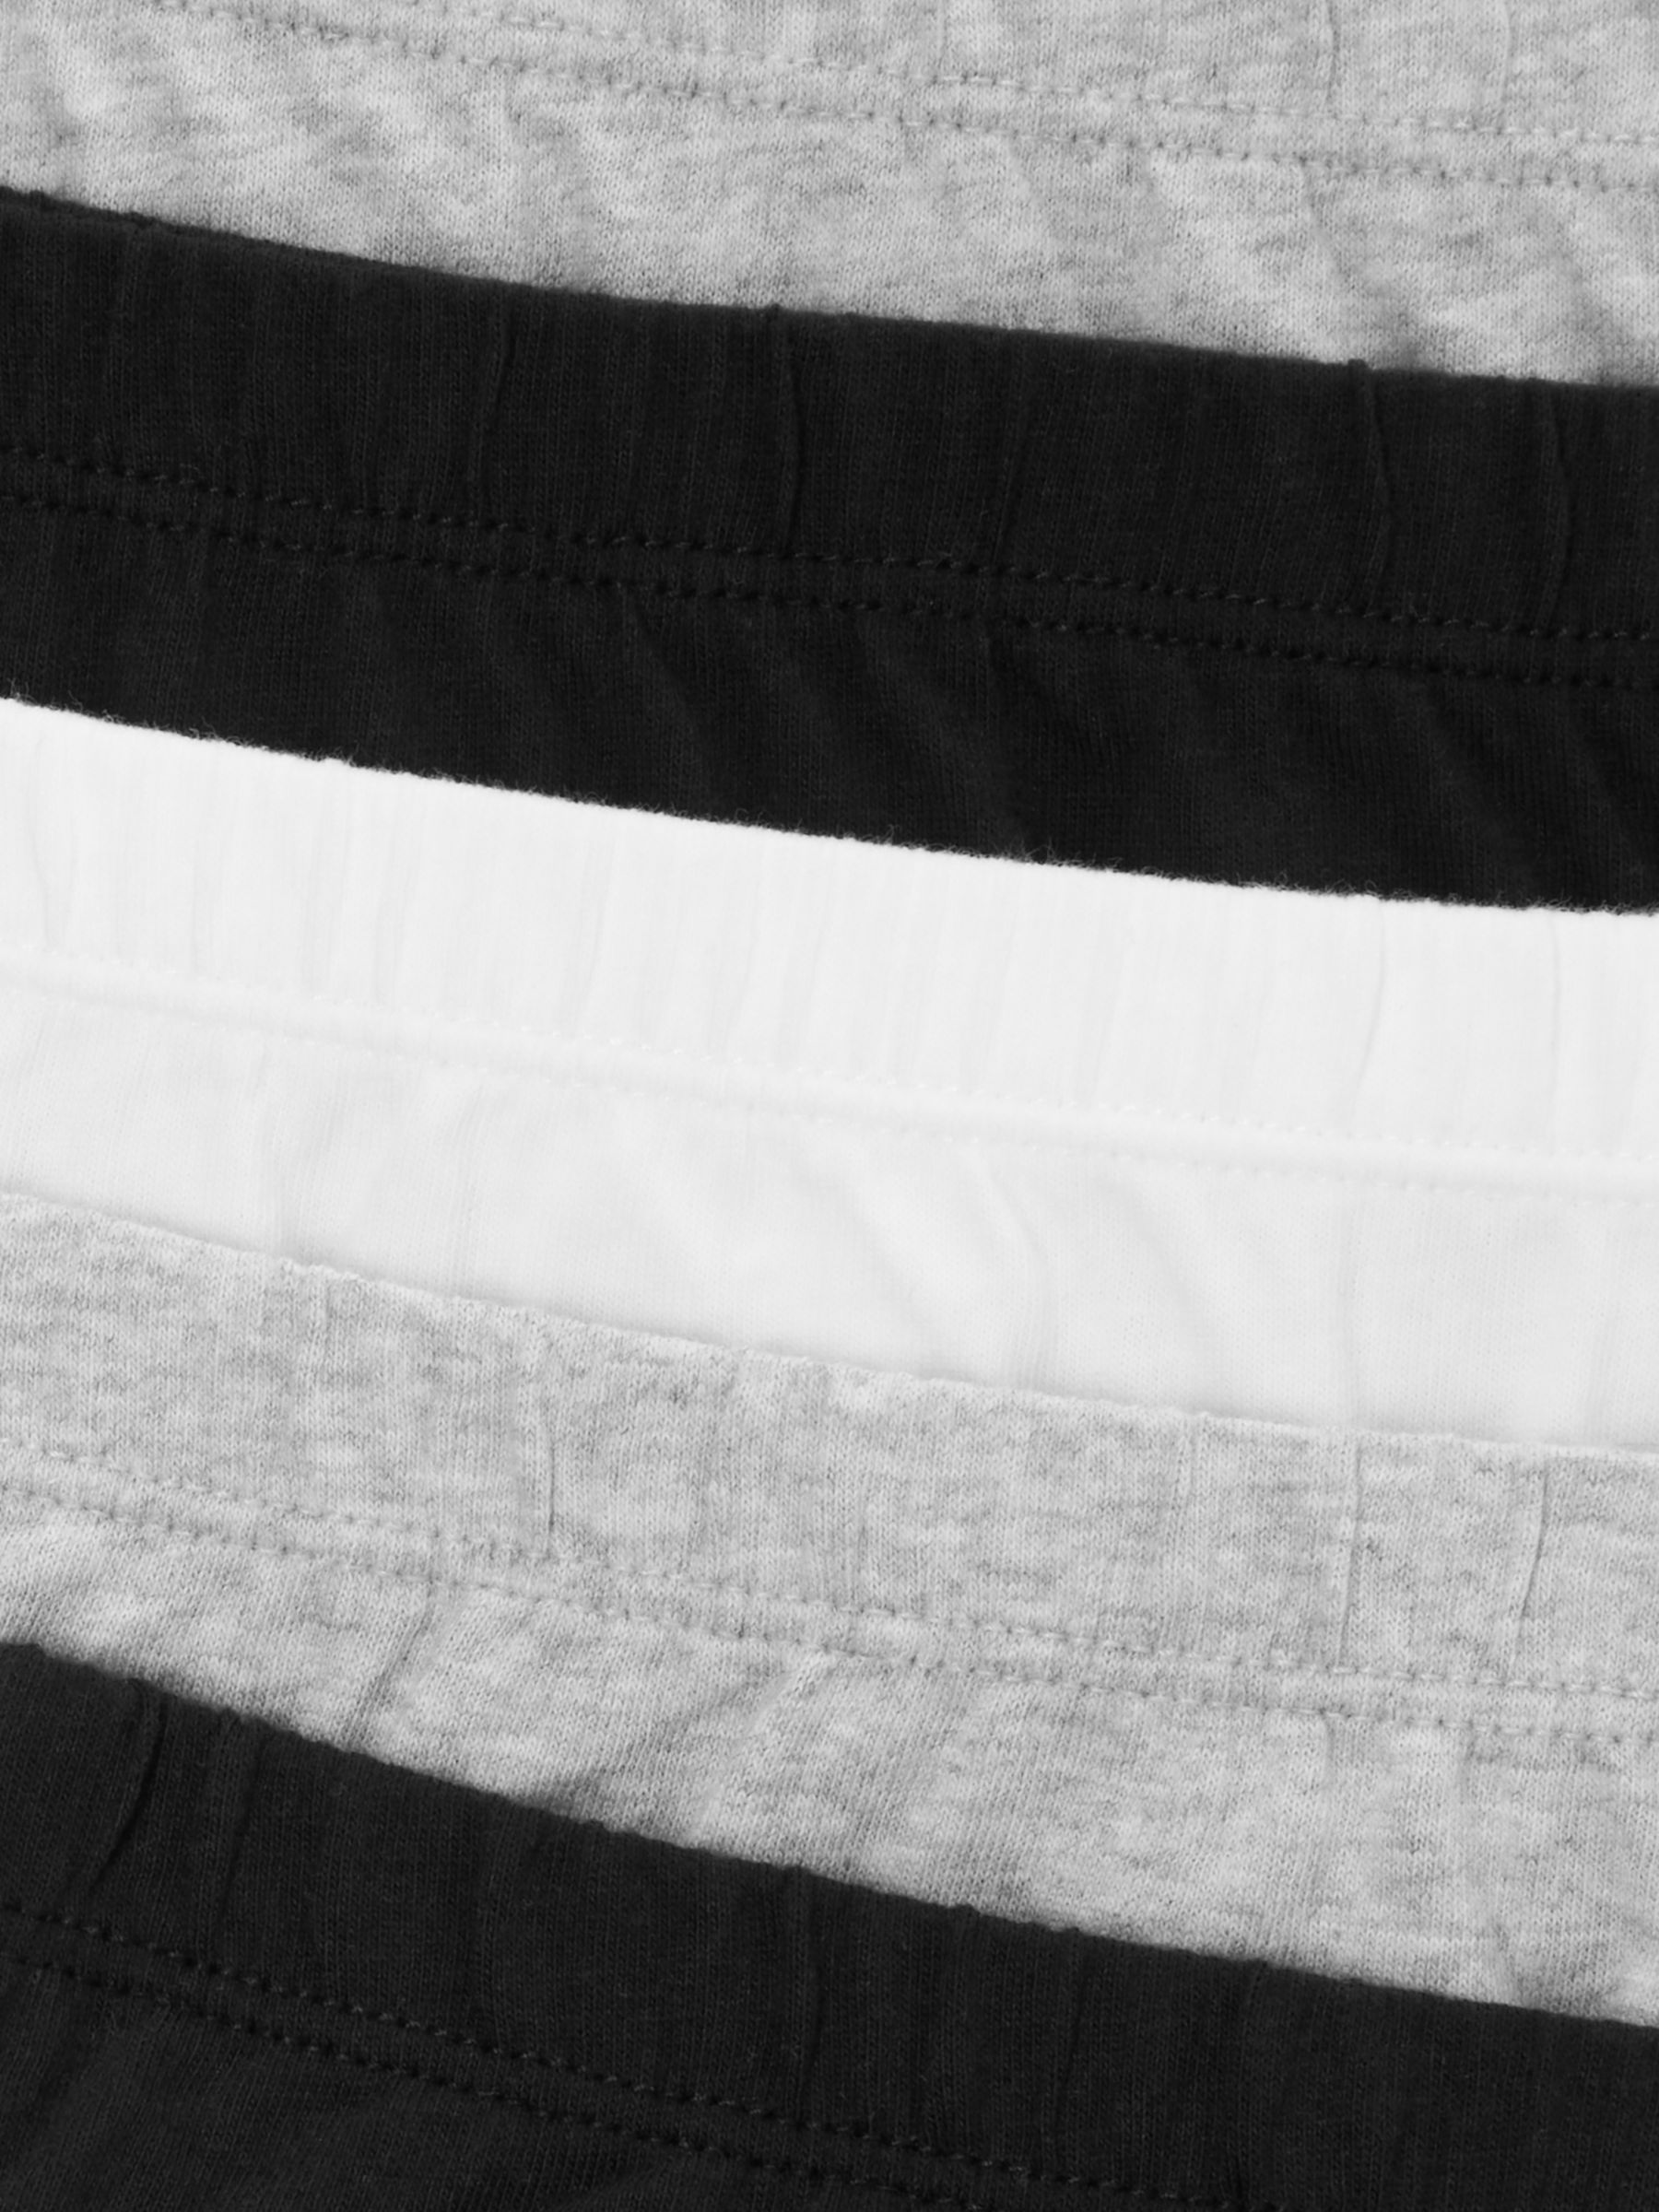 John Lewis Kids' Pants, Pack of 5, Black/White/Grey, 2 years